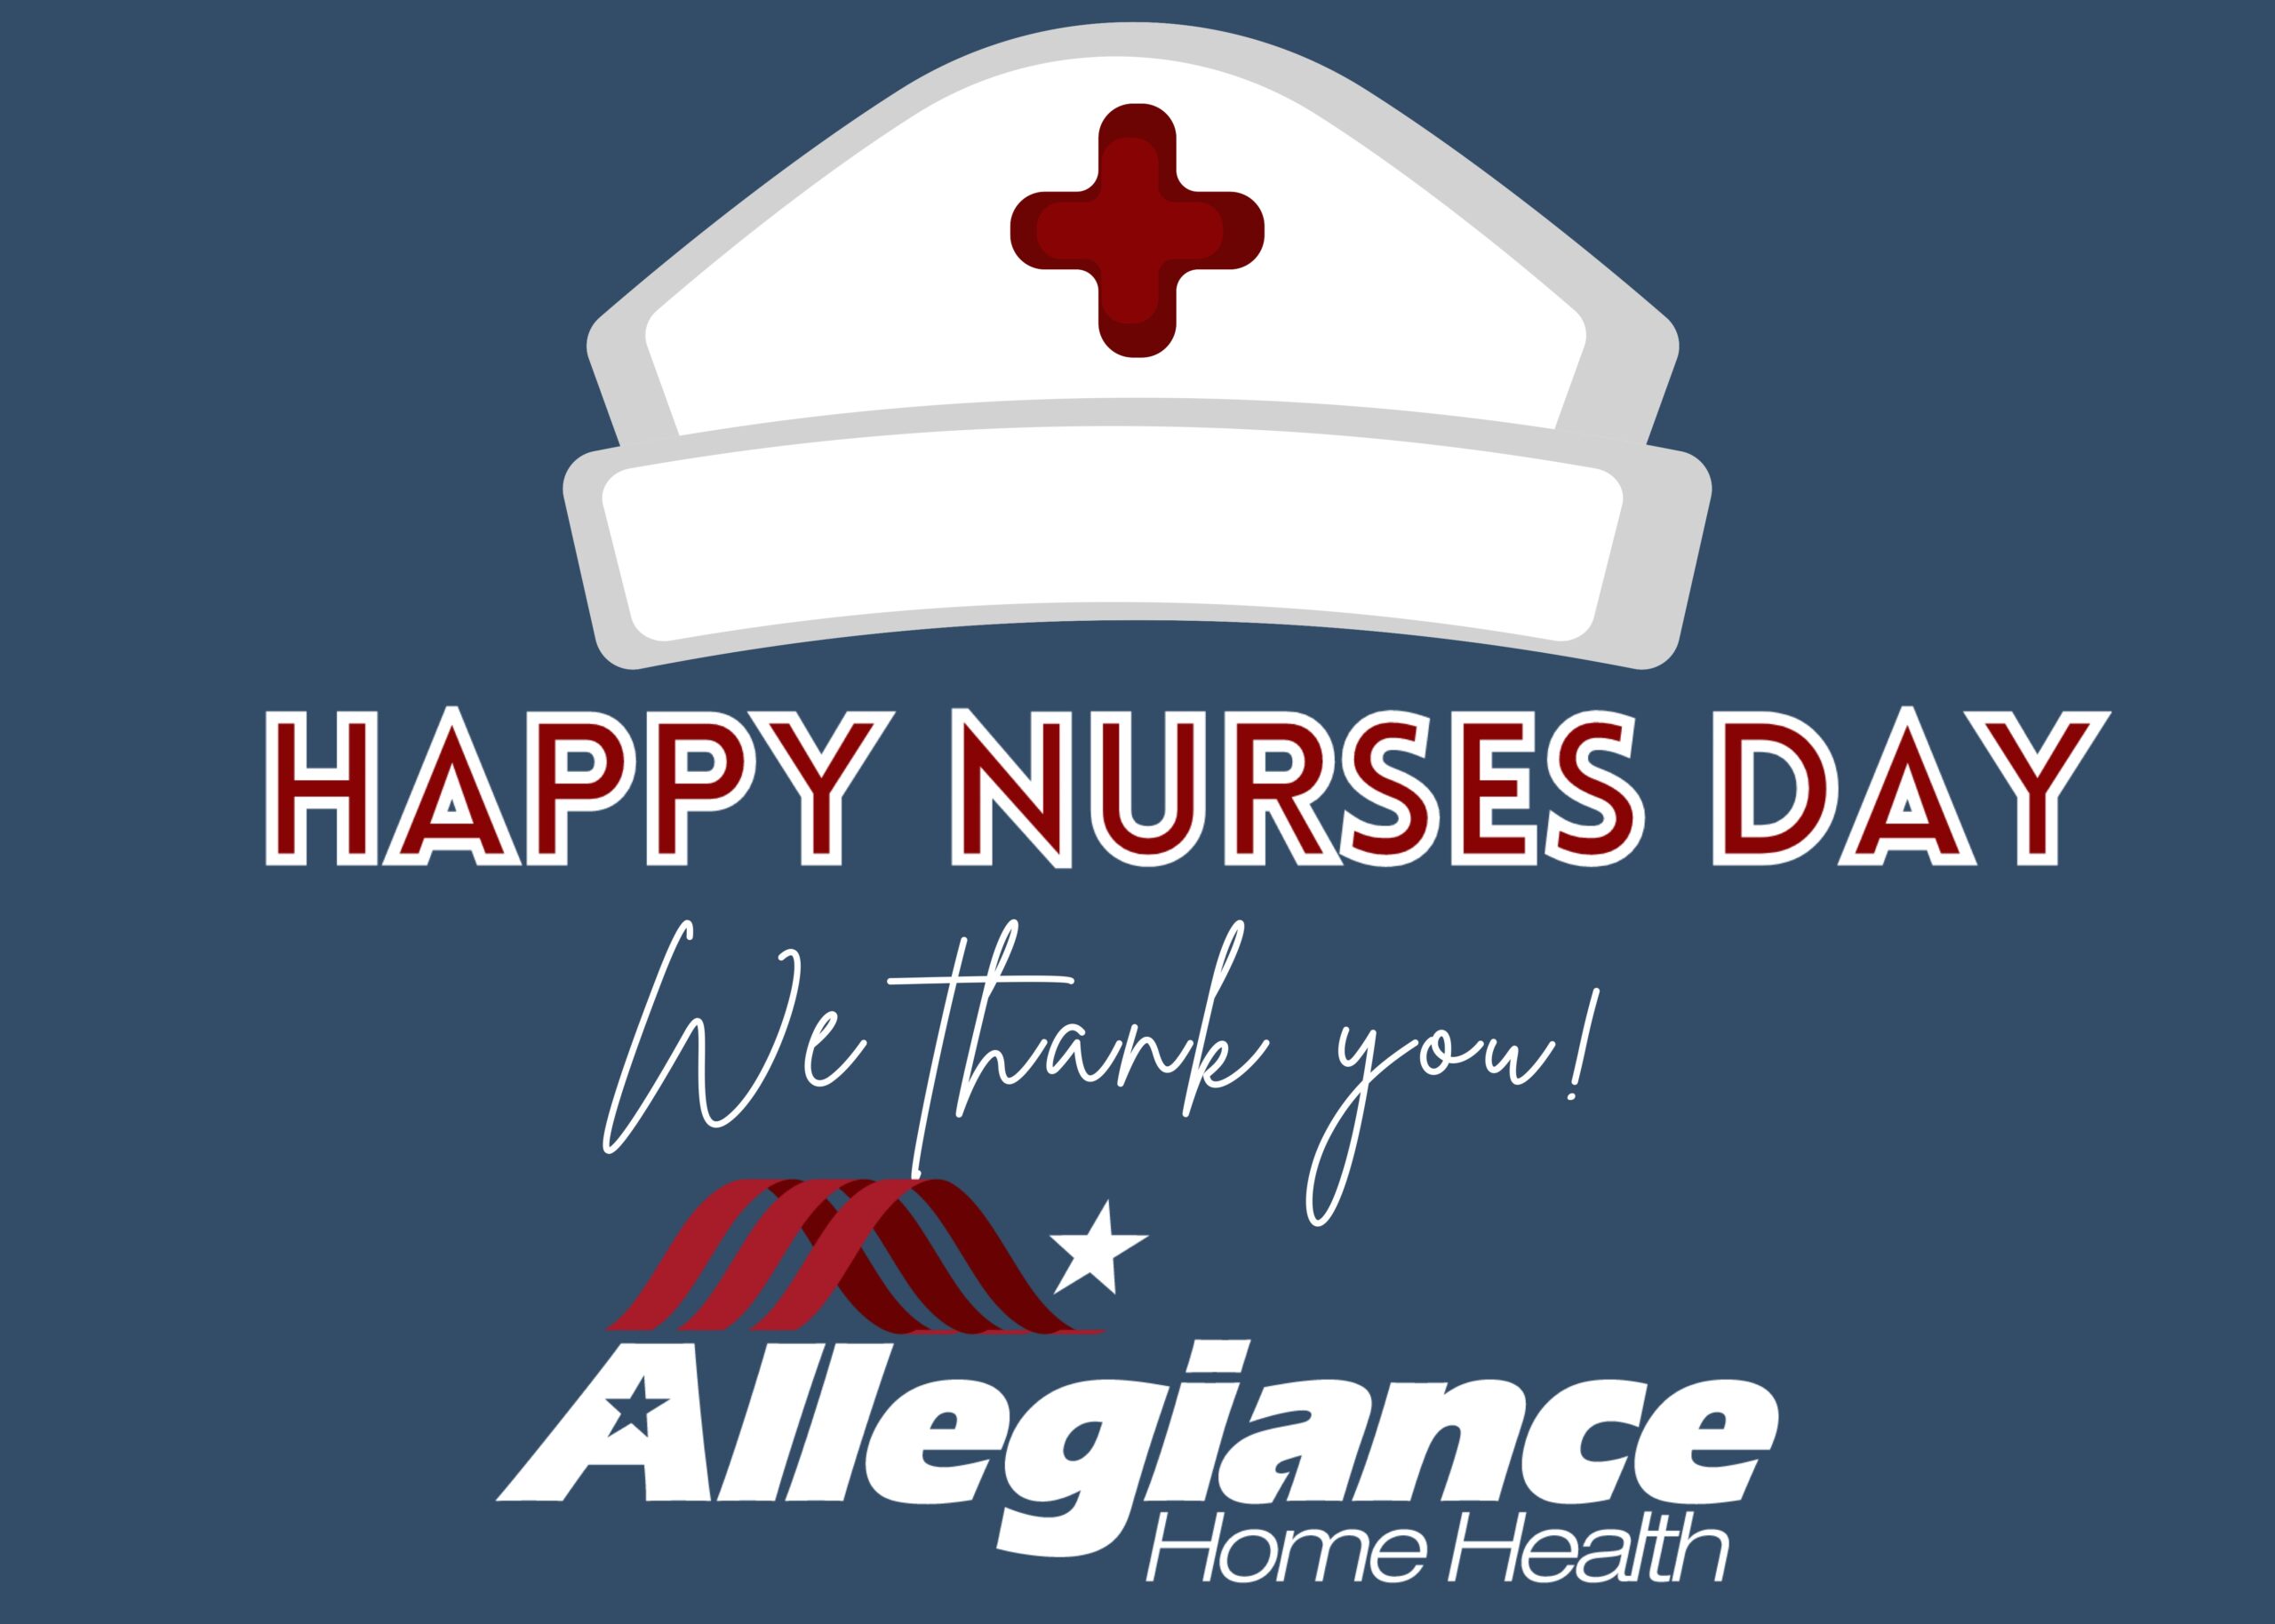 Happy Nurses Day Allegiance